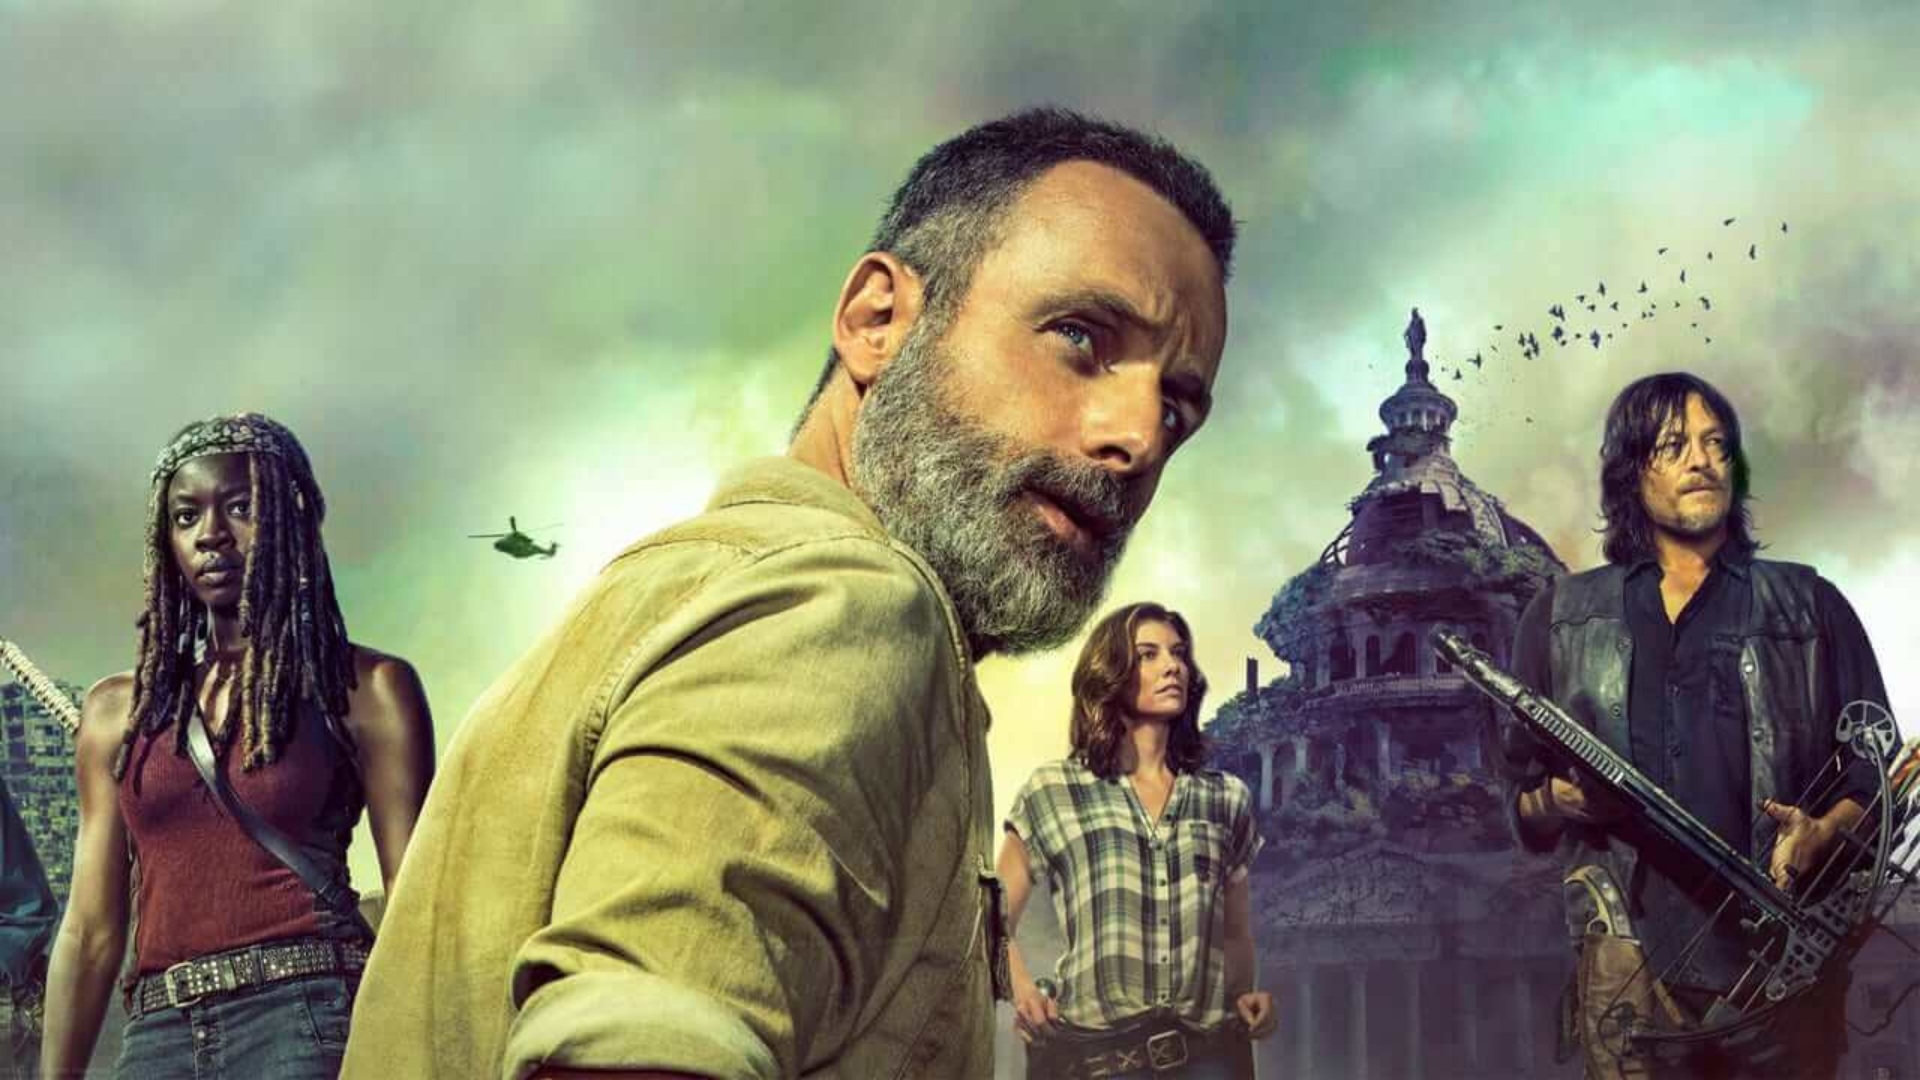  Globoplay e Netflix apresentam nona temporada de “The Walking Dead”